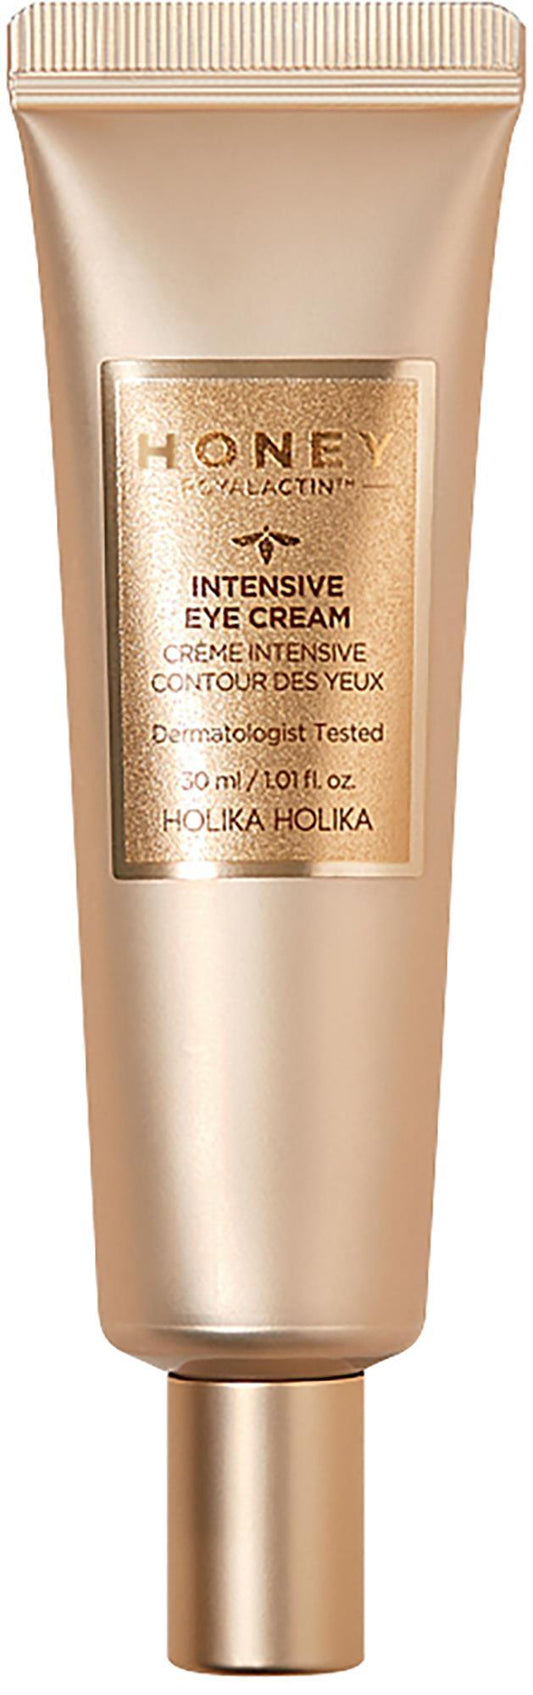 [HolikaHolika] Honey Royalactin Intensive Eye Cream 30ml - KBeauti